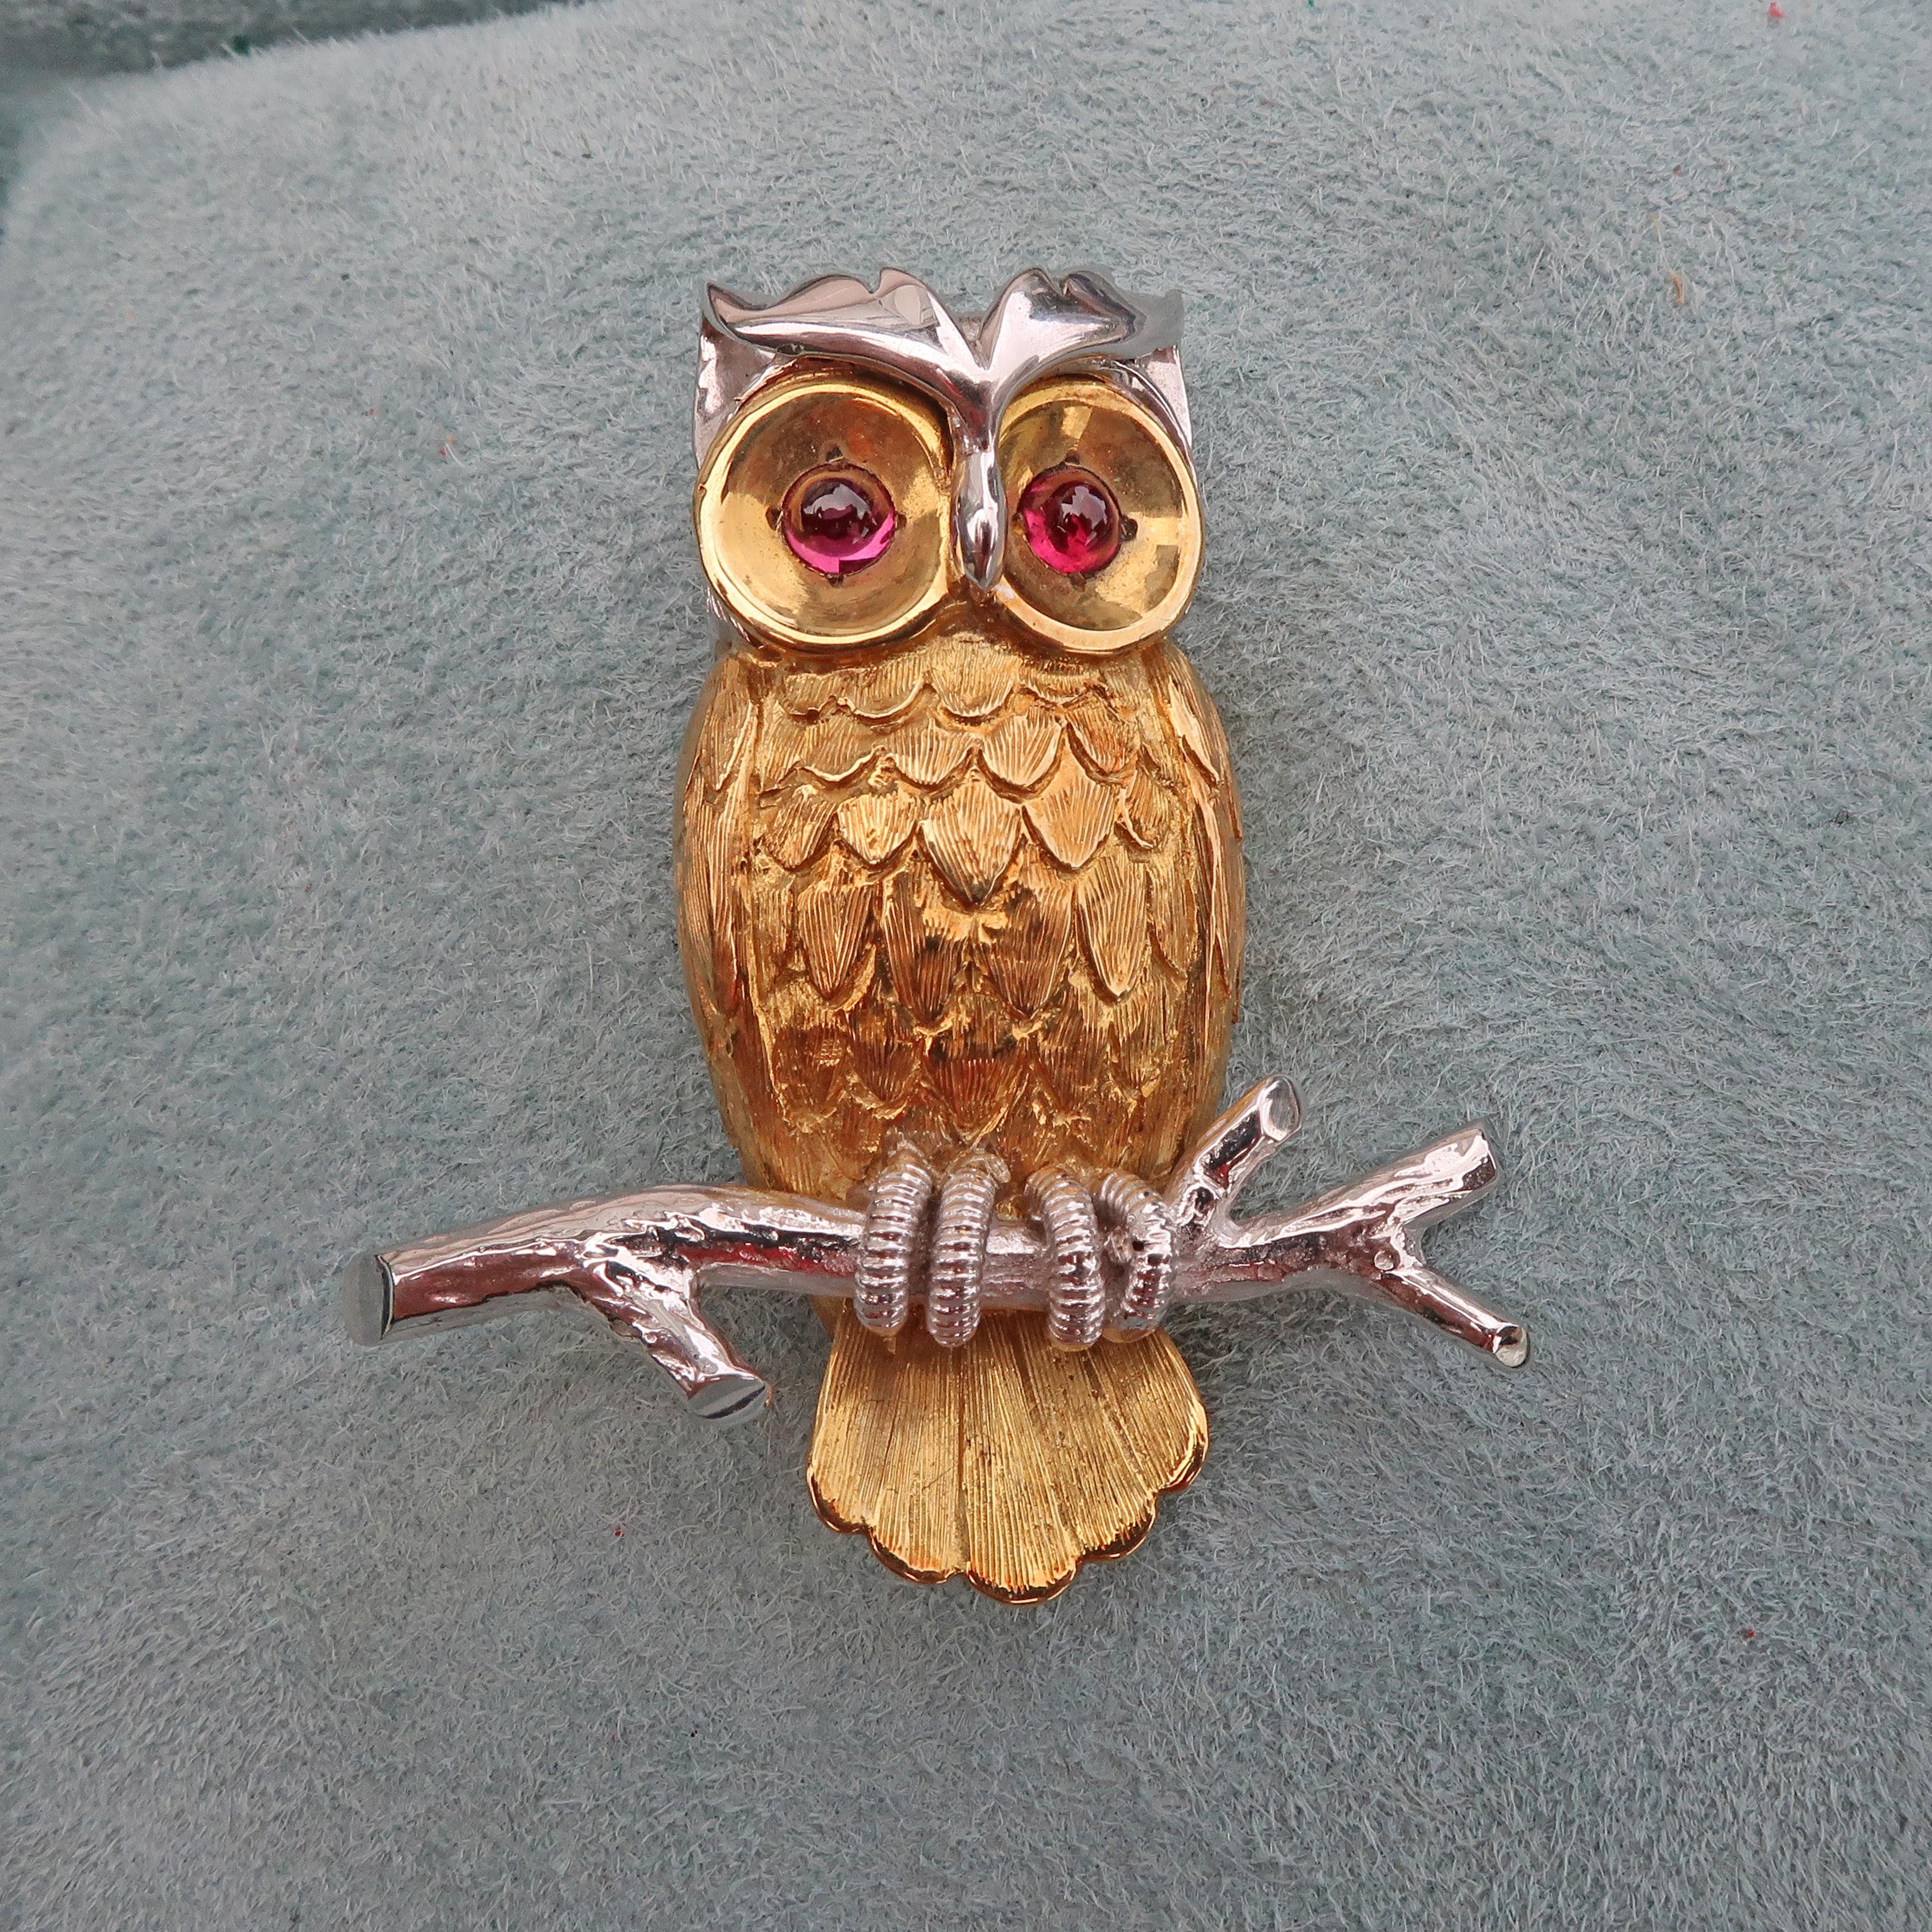 18 Karat Gold Owl Brooch with Ruby Eyes 1